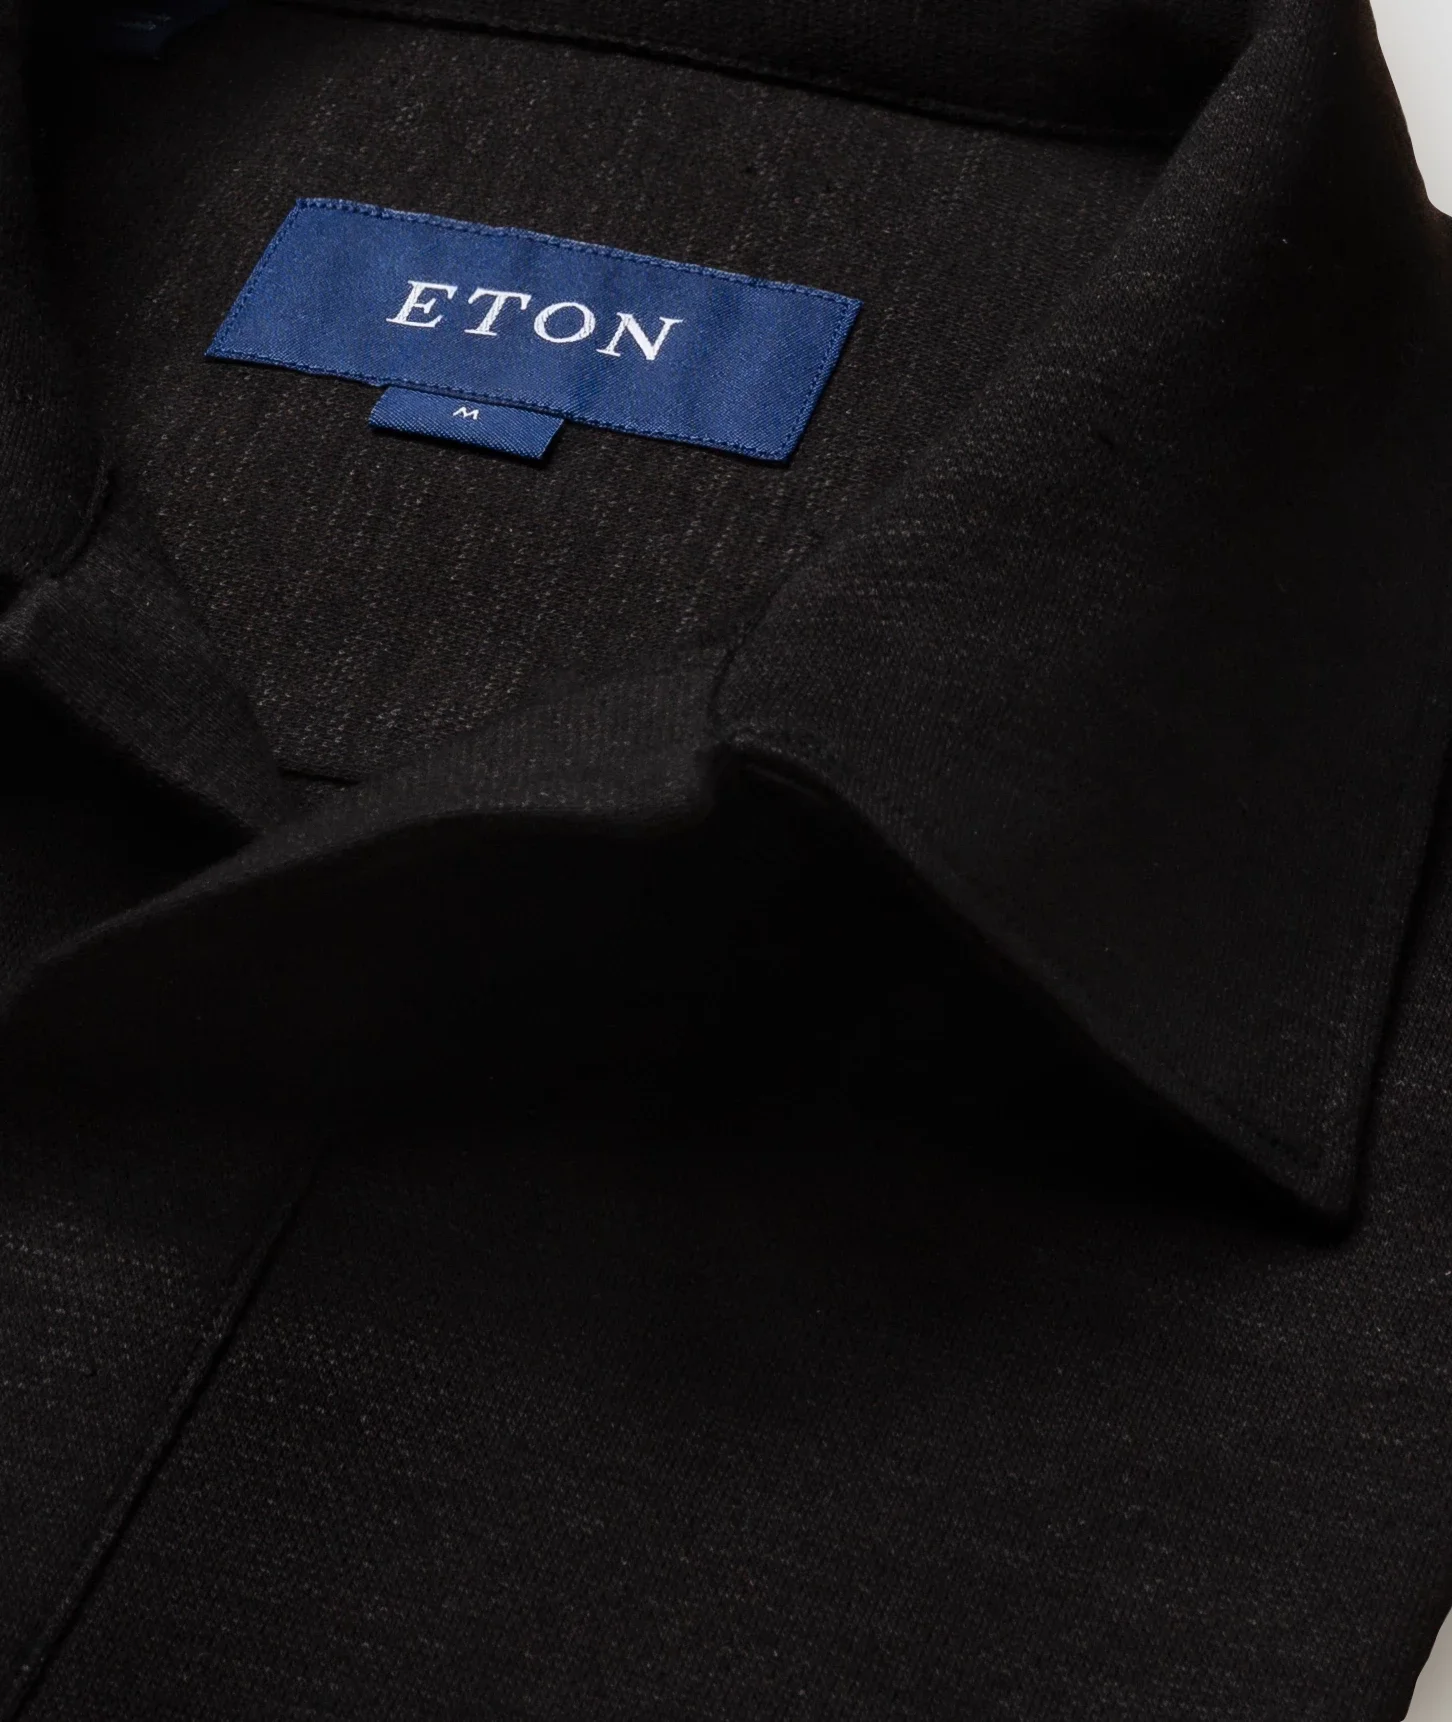 Eton - black pique cotton linnen short sleeve